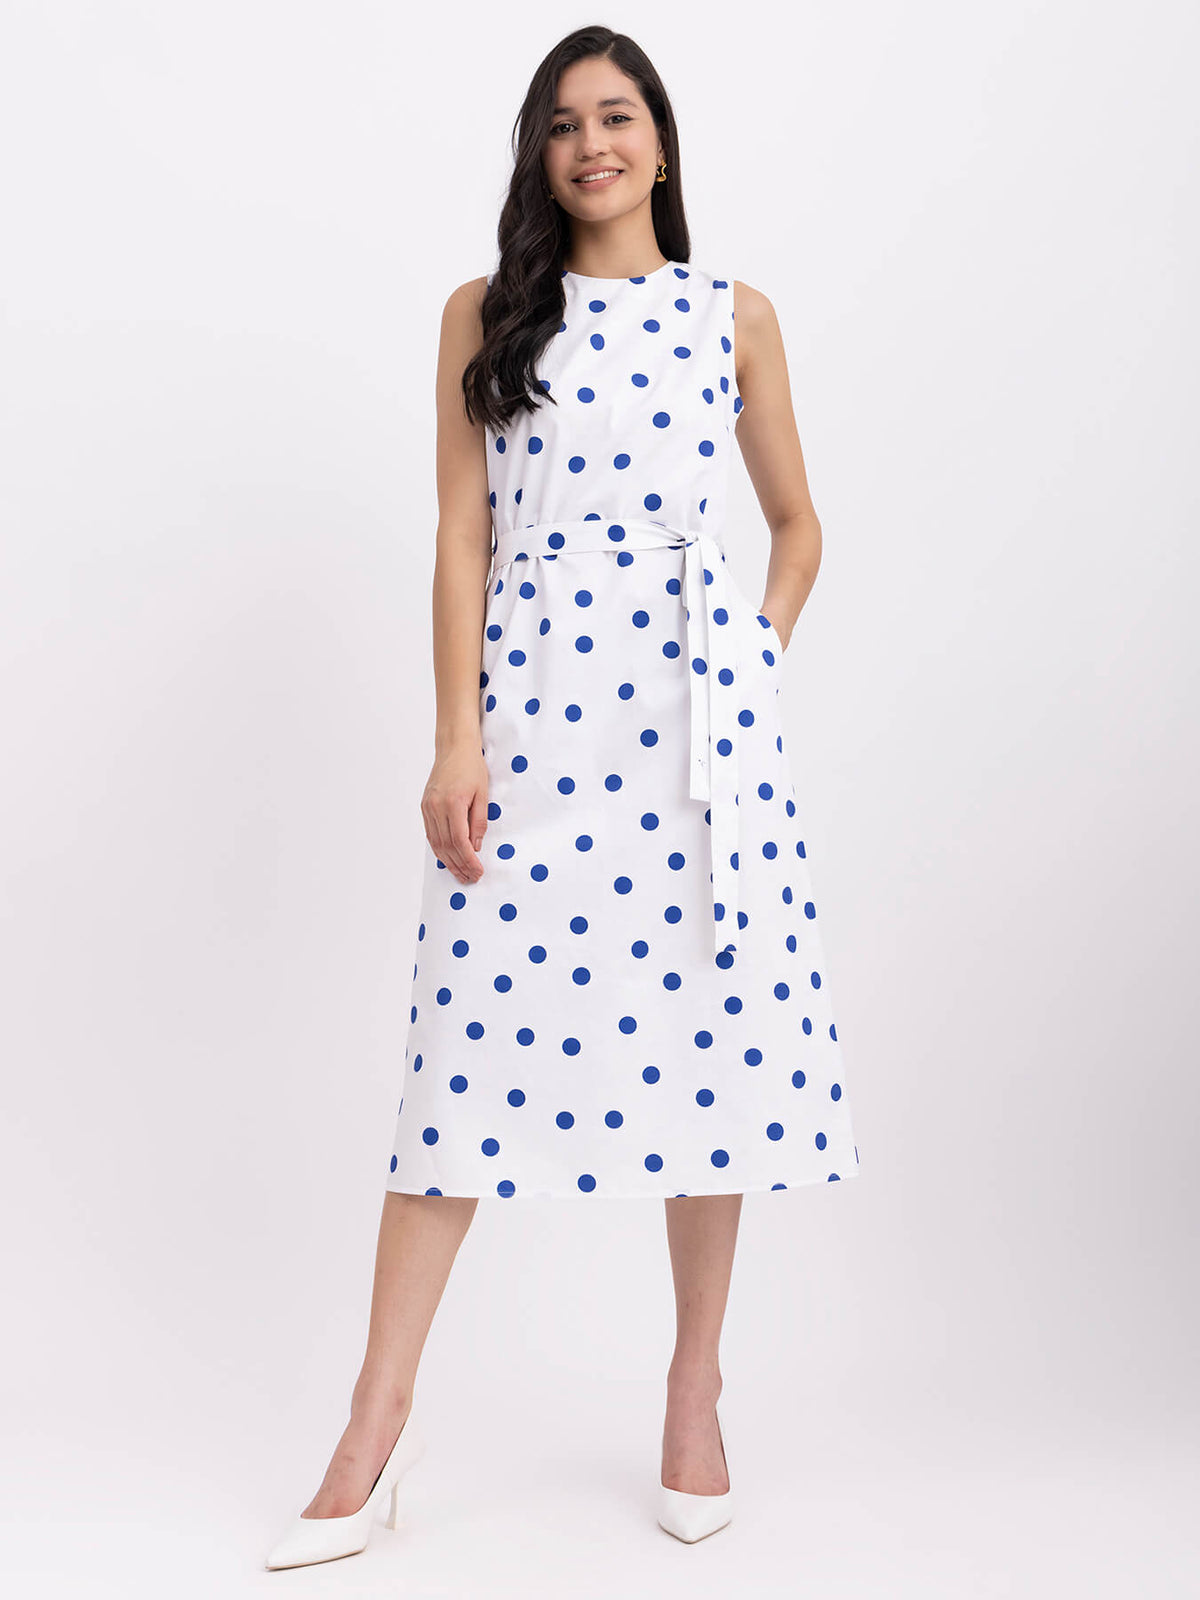 Cotton Polka Dot Dress - White And Blue